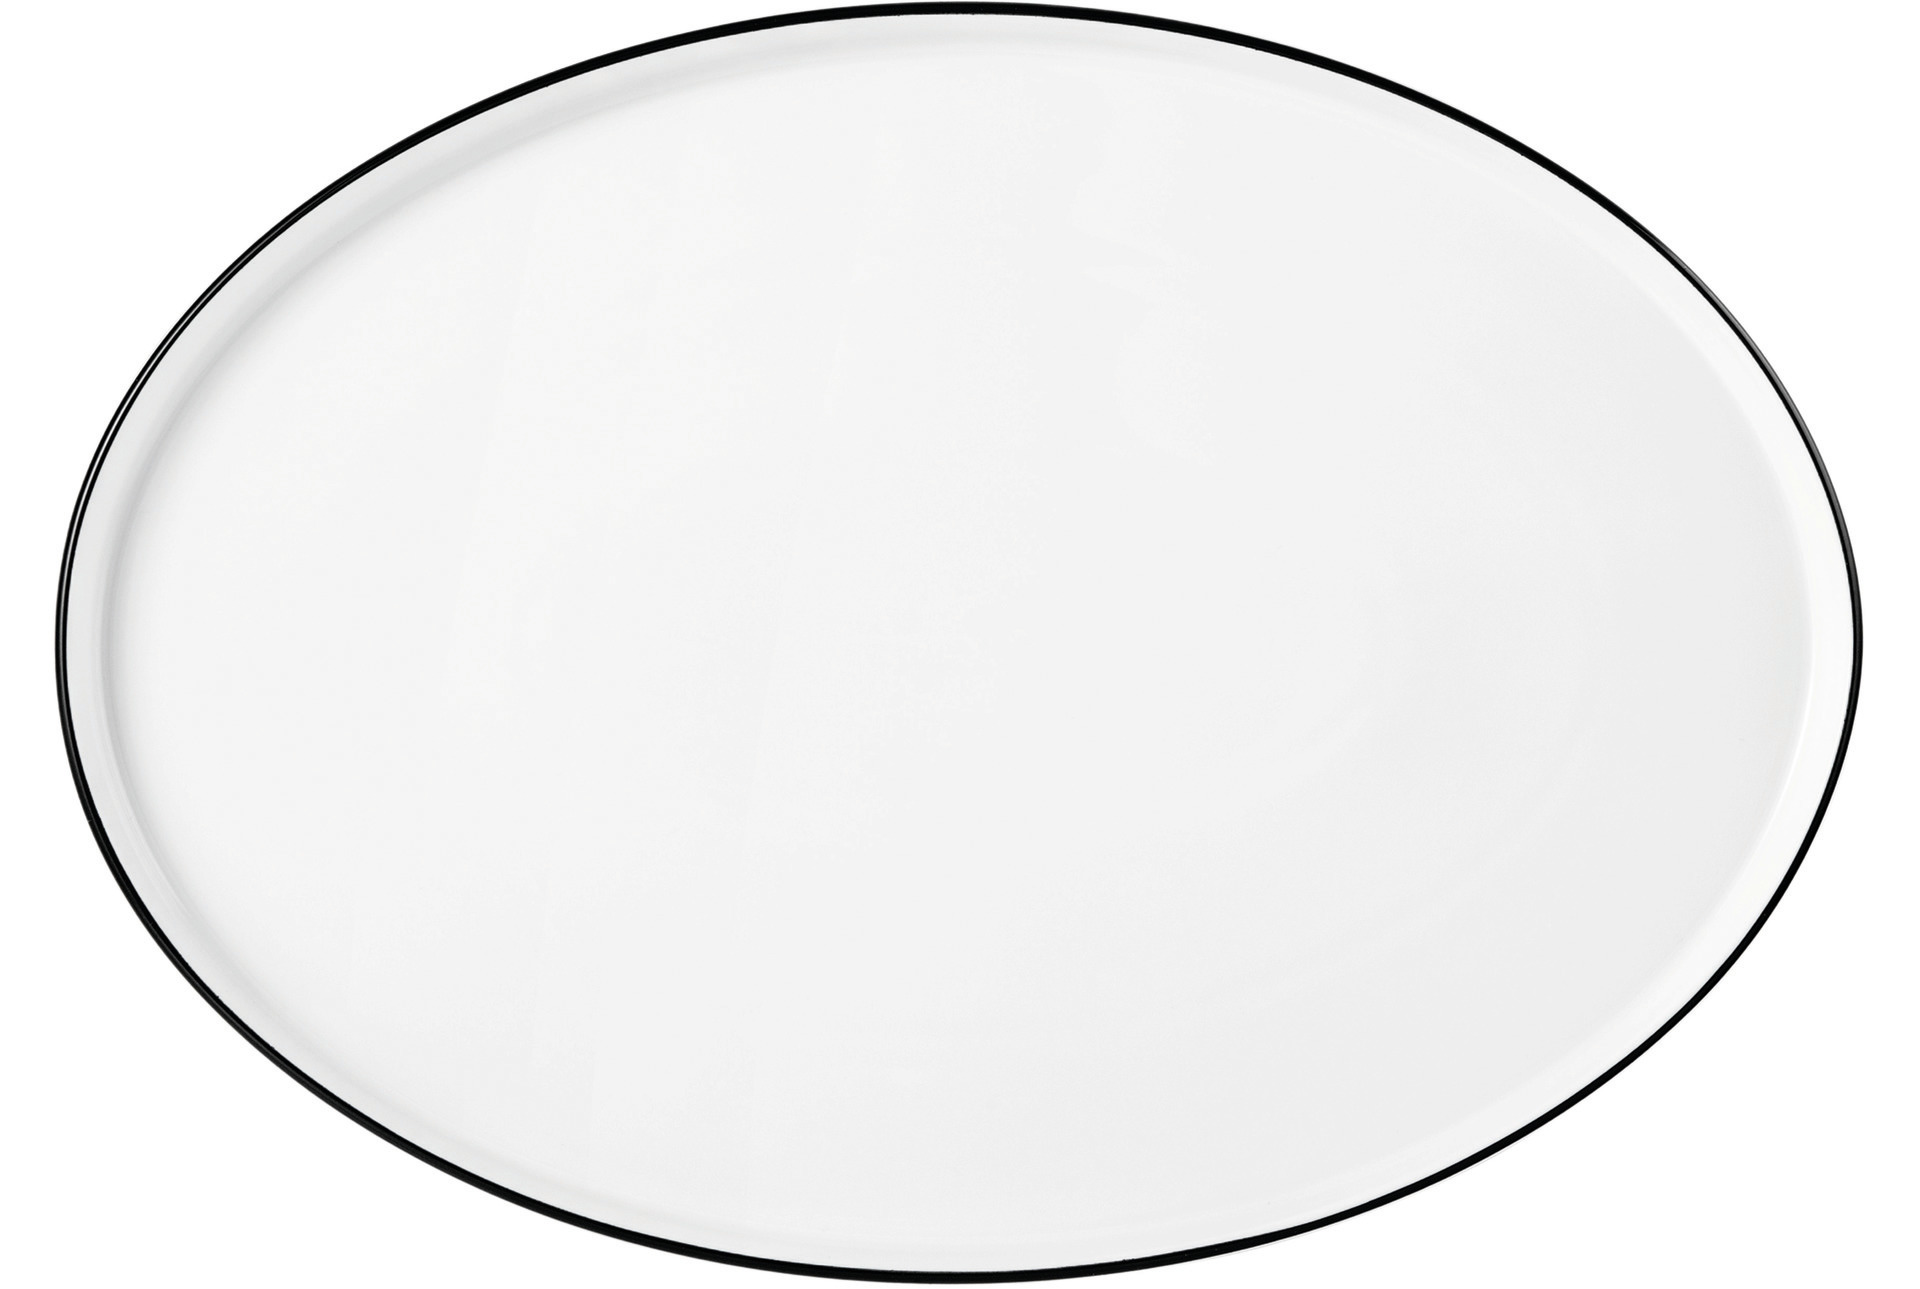 Teller flach oval 366 x 260 mm Black Line (M5398-36x26)